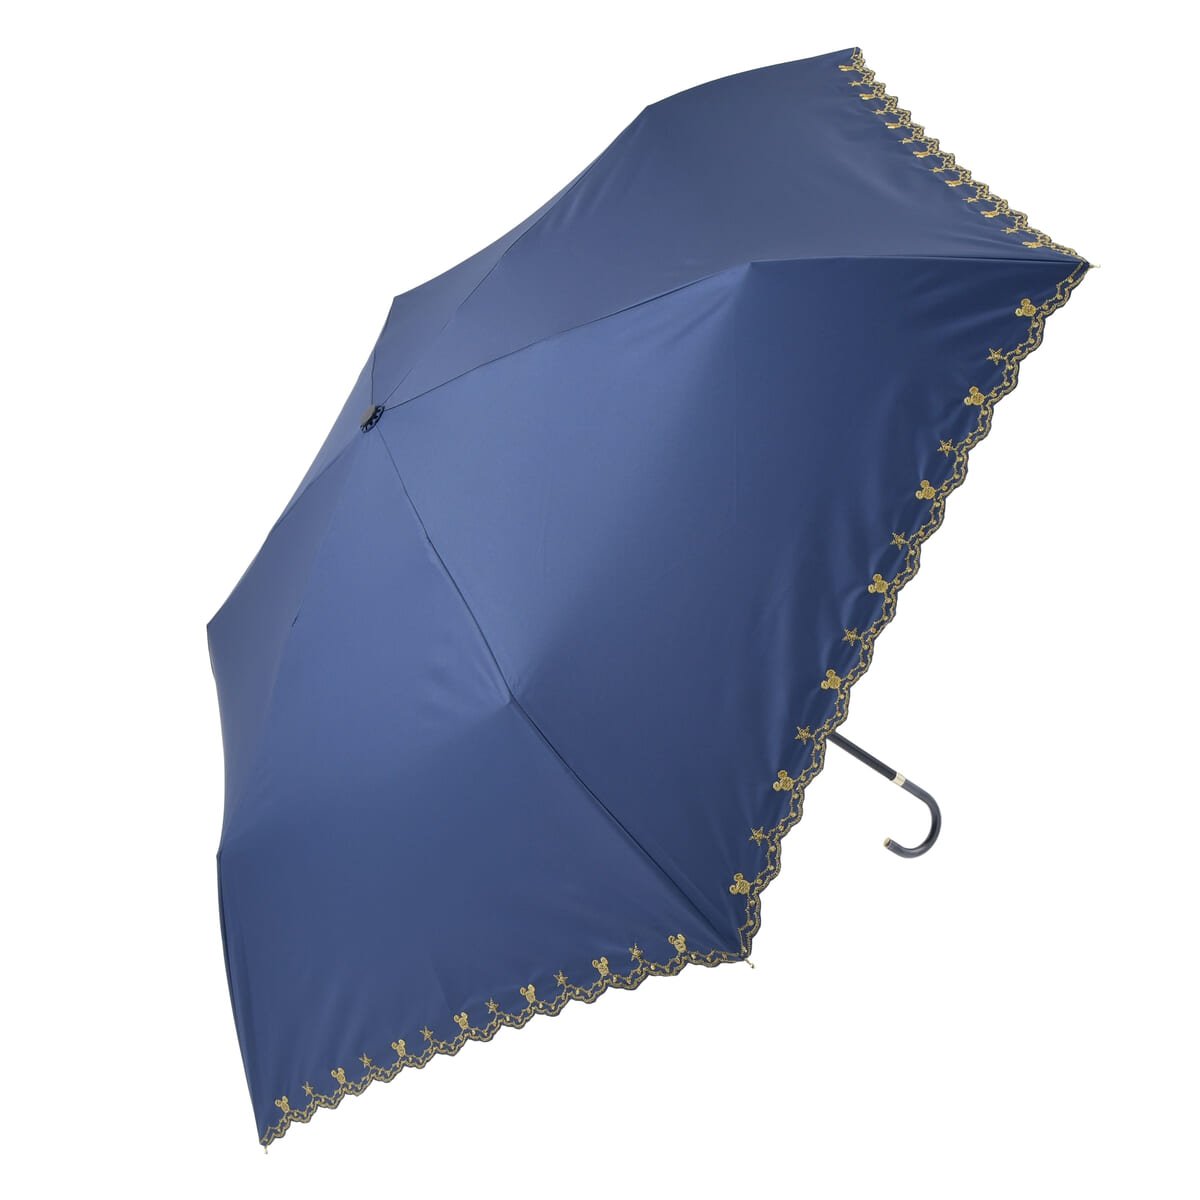 【Wpc.】ミッキー 日傘 折りたたみ式 晴雨兼用 チャーム付き